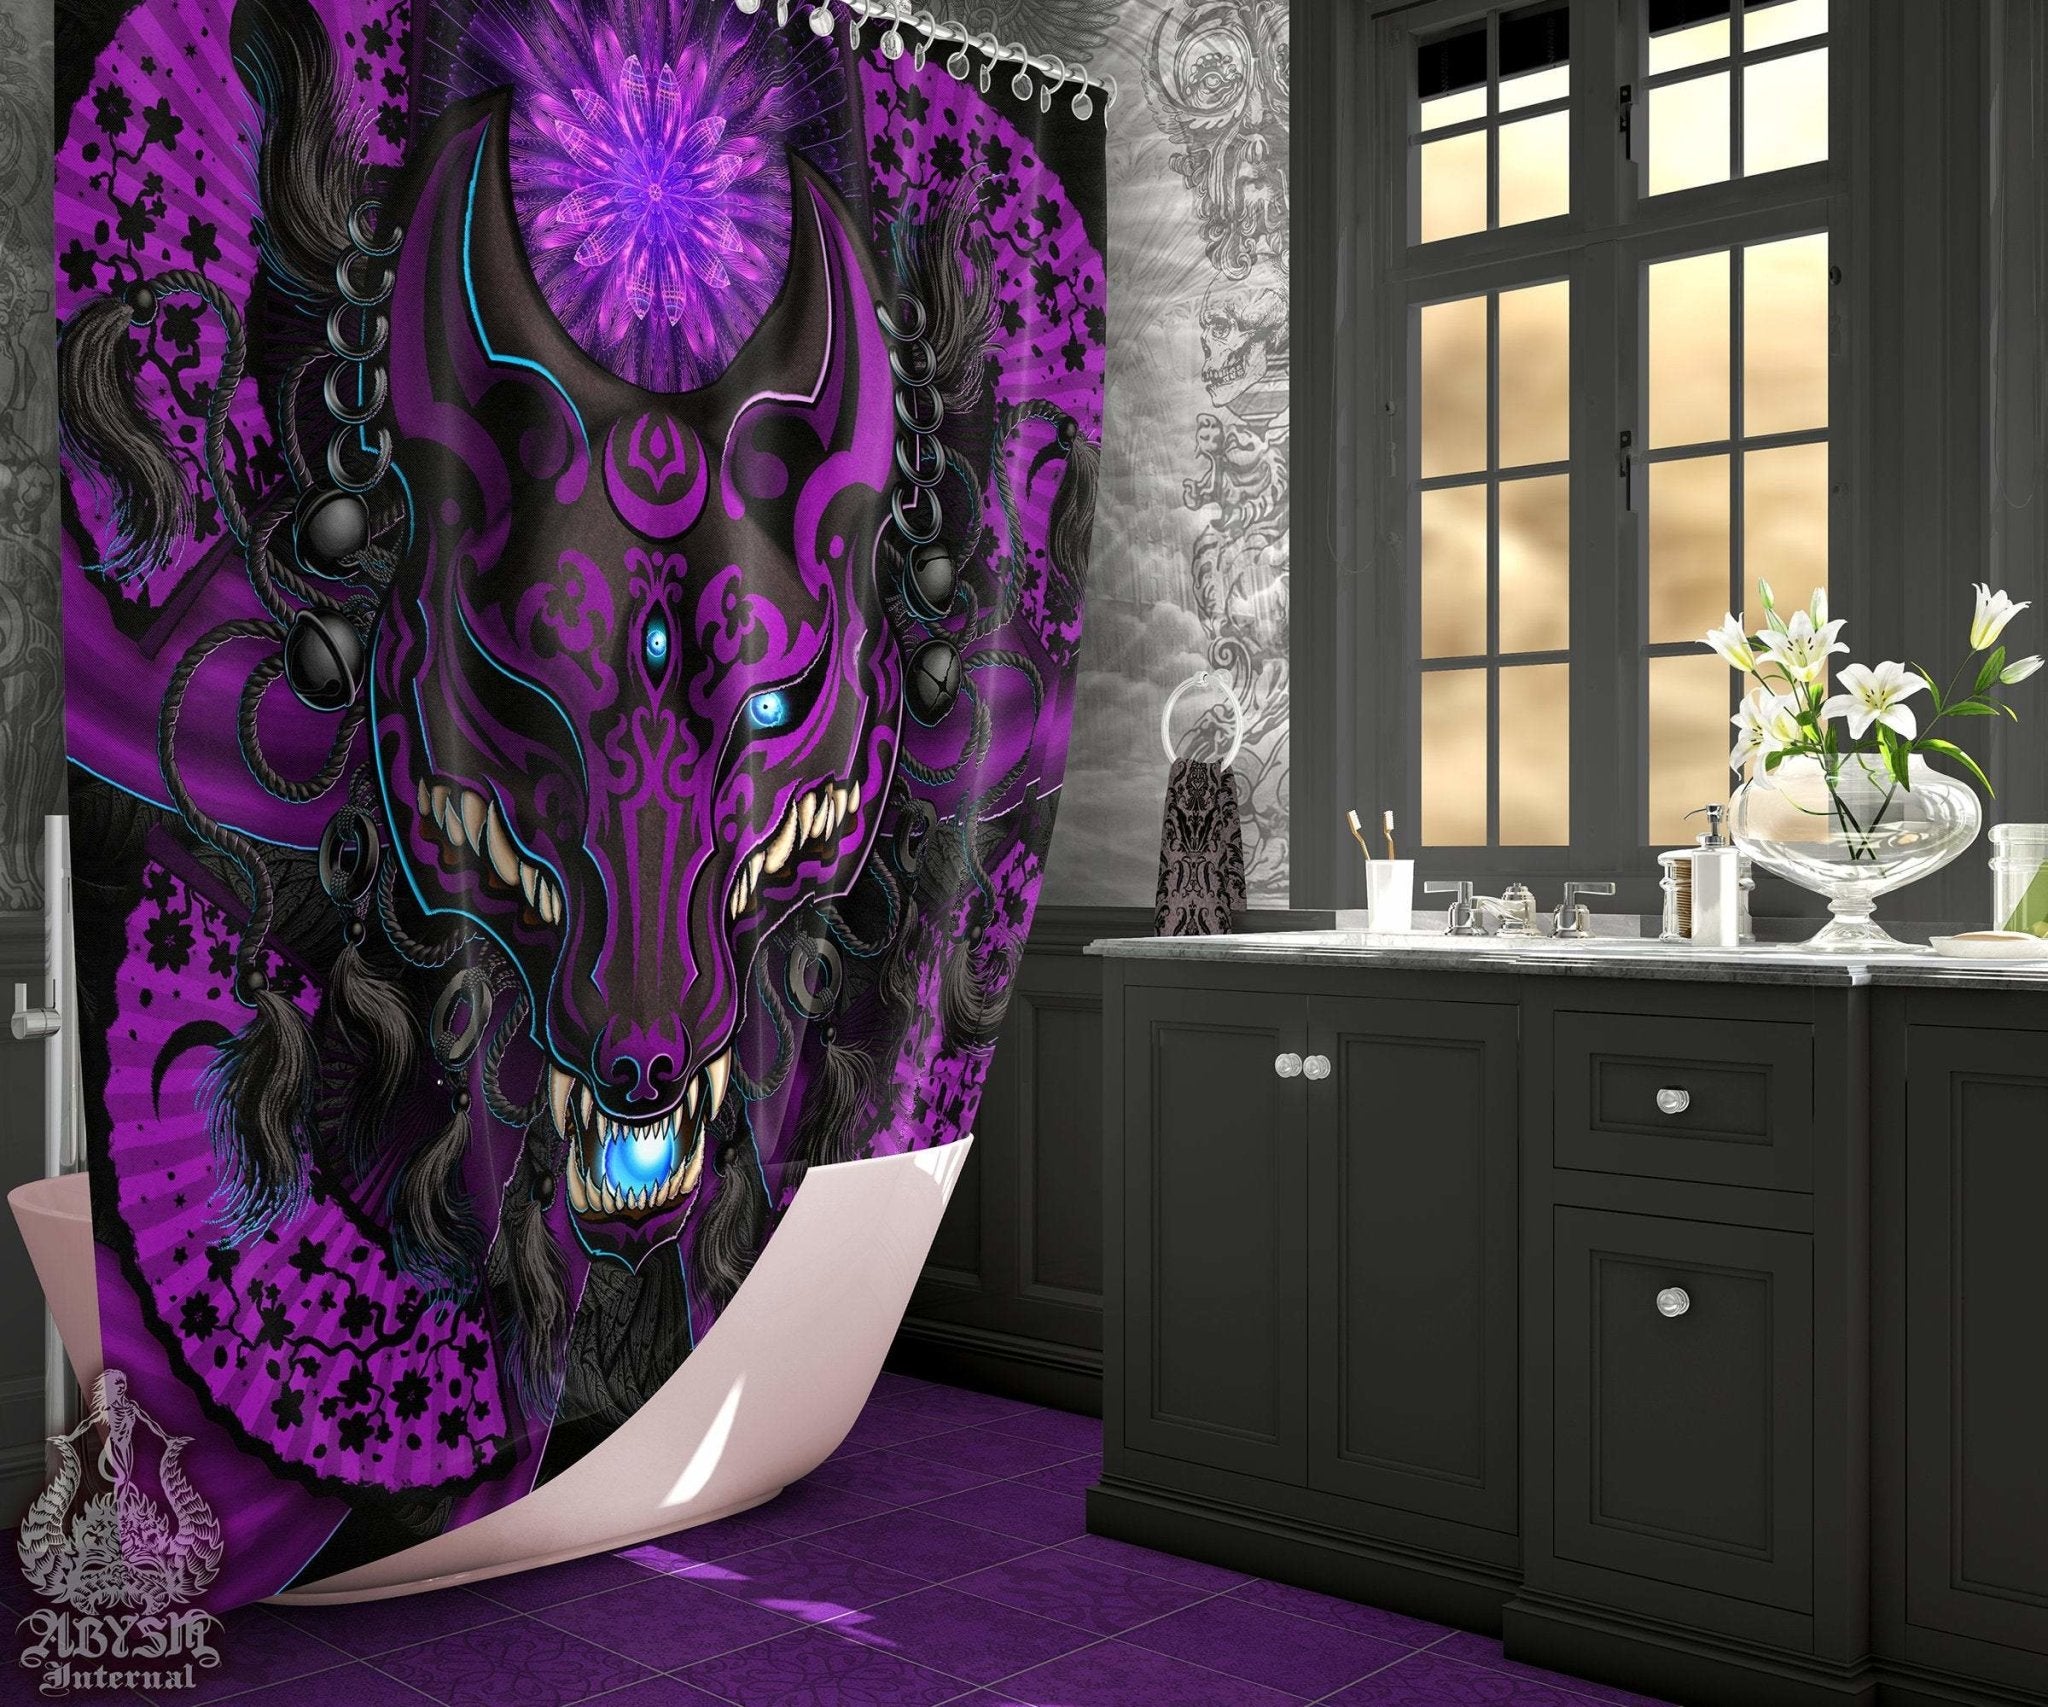 Pastel Goth Shower Curtain, Kitsune Mask, Okami, Anime, Gothic Bathroom Decor, Fox Art - Black & Purple - Abysm Internal